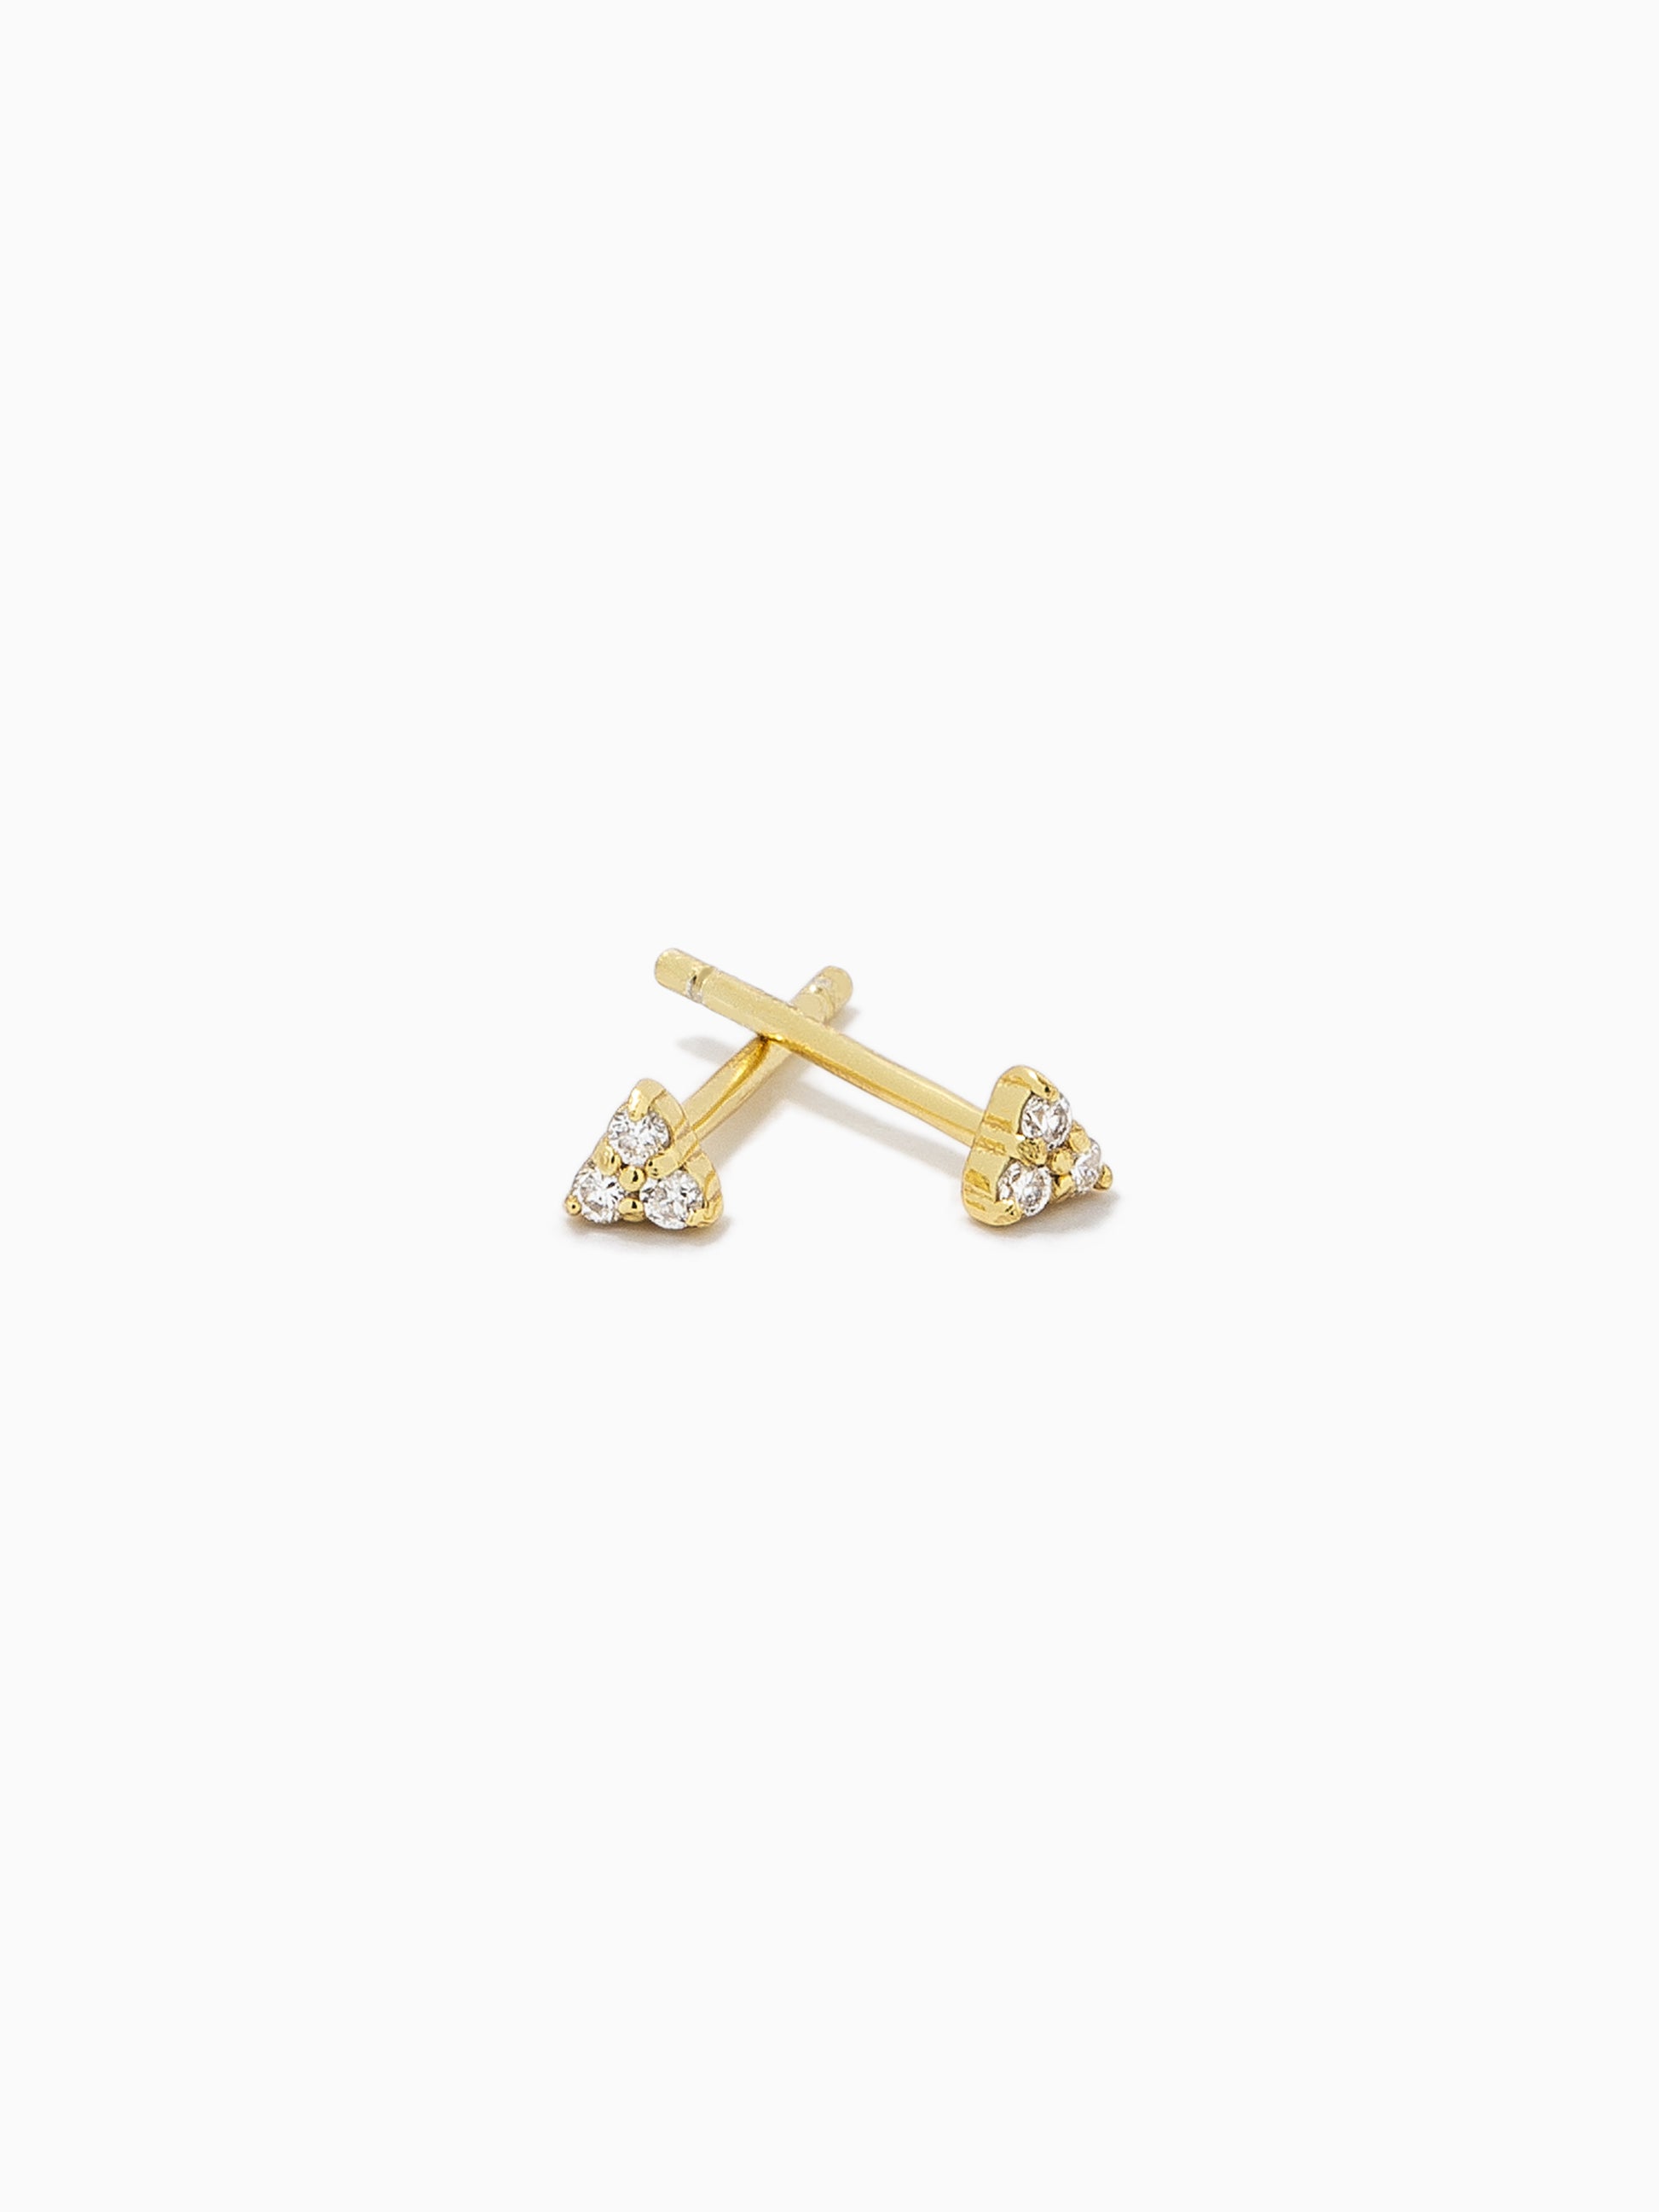 Triangle Diamond Vermeil Stud Earrings | Gold Vermeil | Product Detail Image 2 | Uncommon James